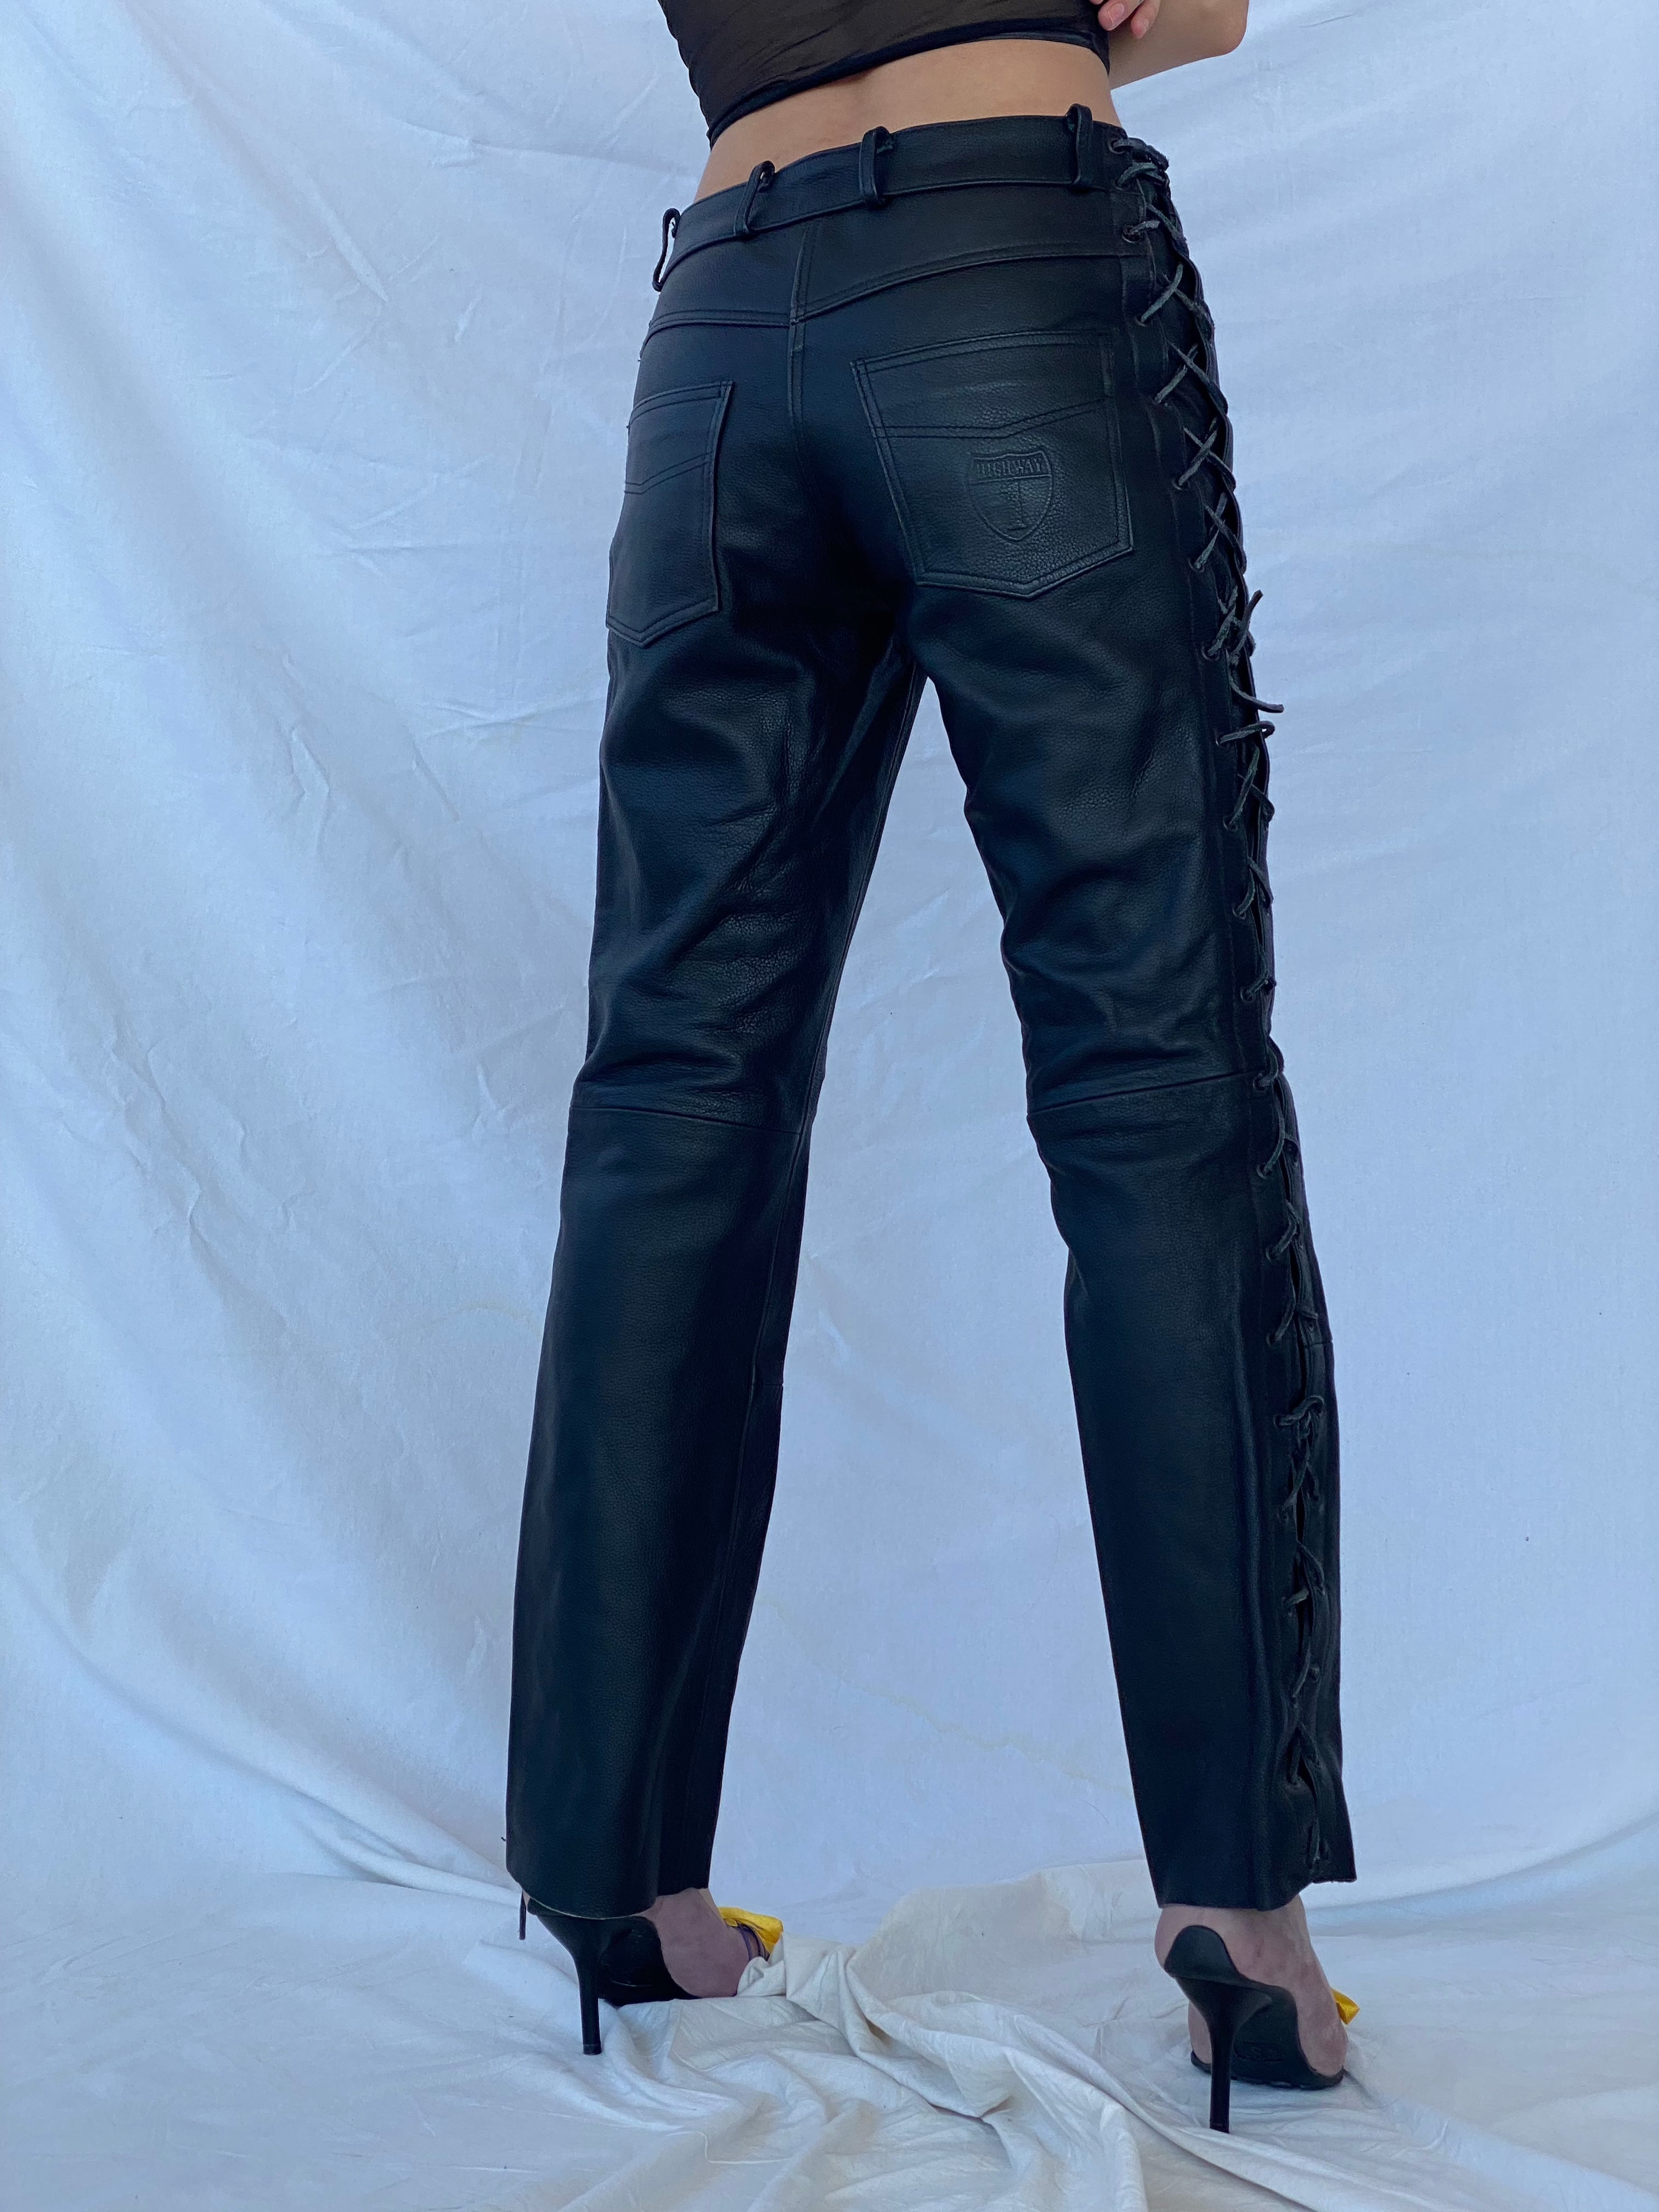 HIGHWAY1 Bikers Genuine Leather Pants - Balagan Vintage Leather Pants black leather, genuine leather, leather pants